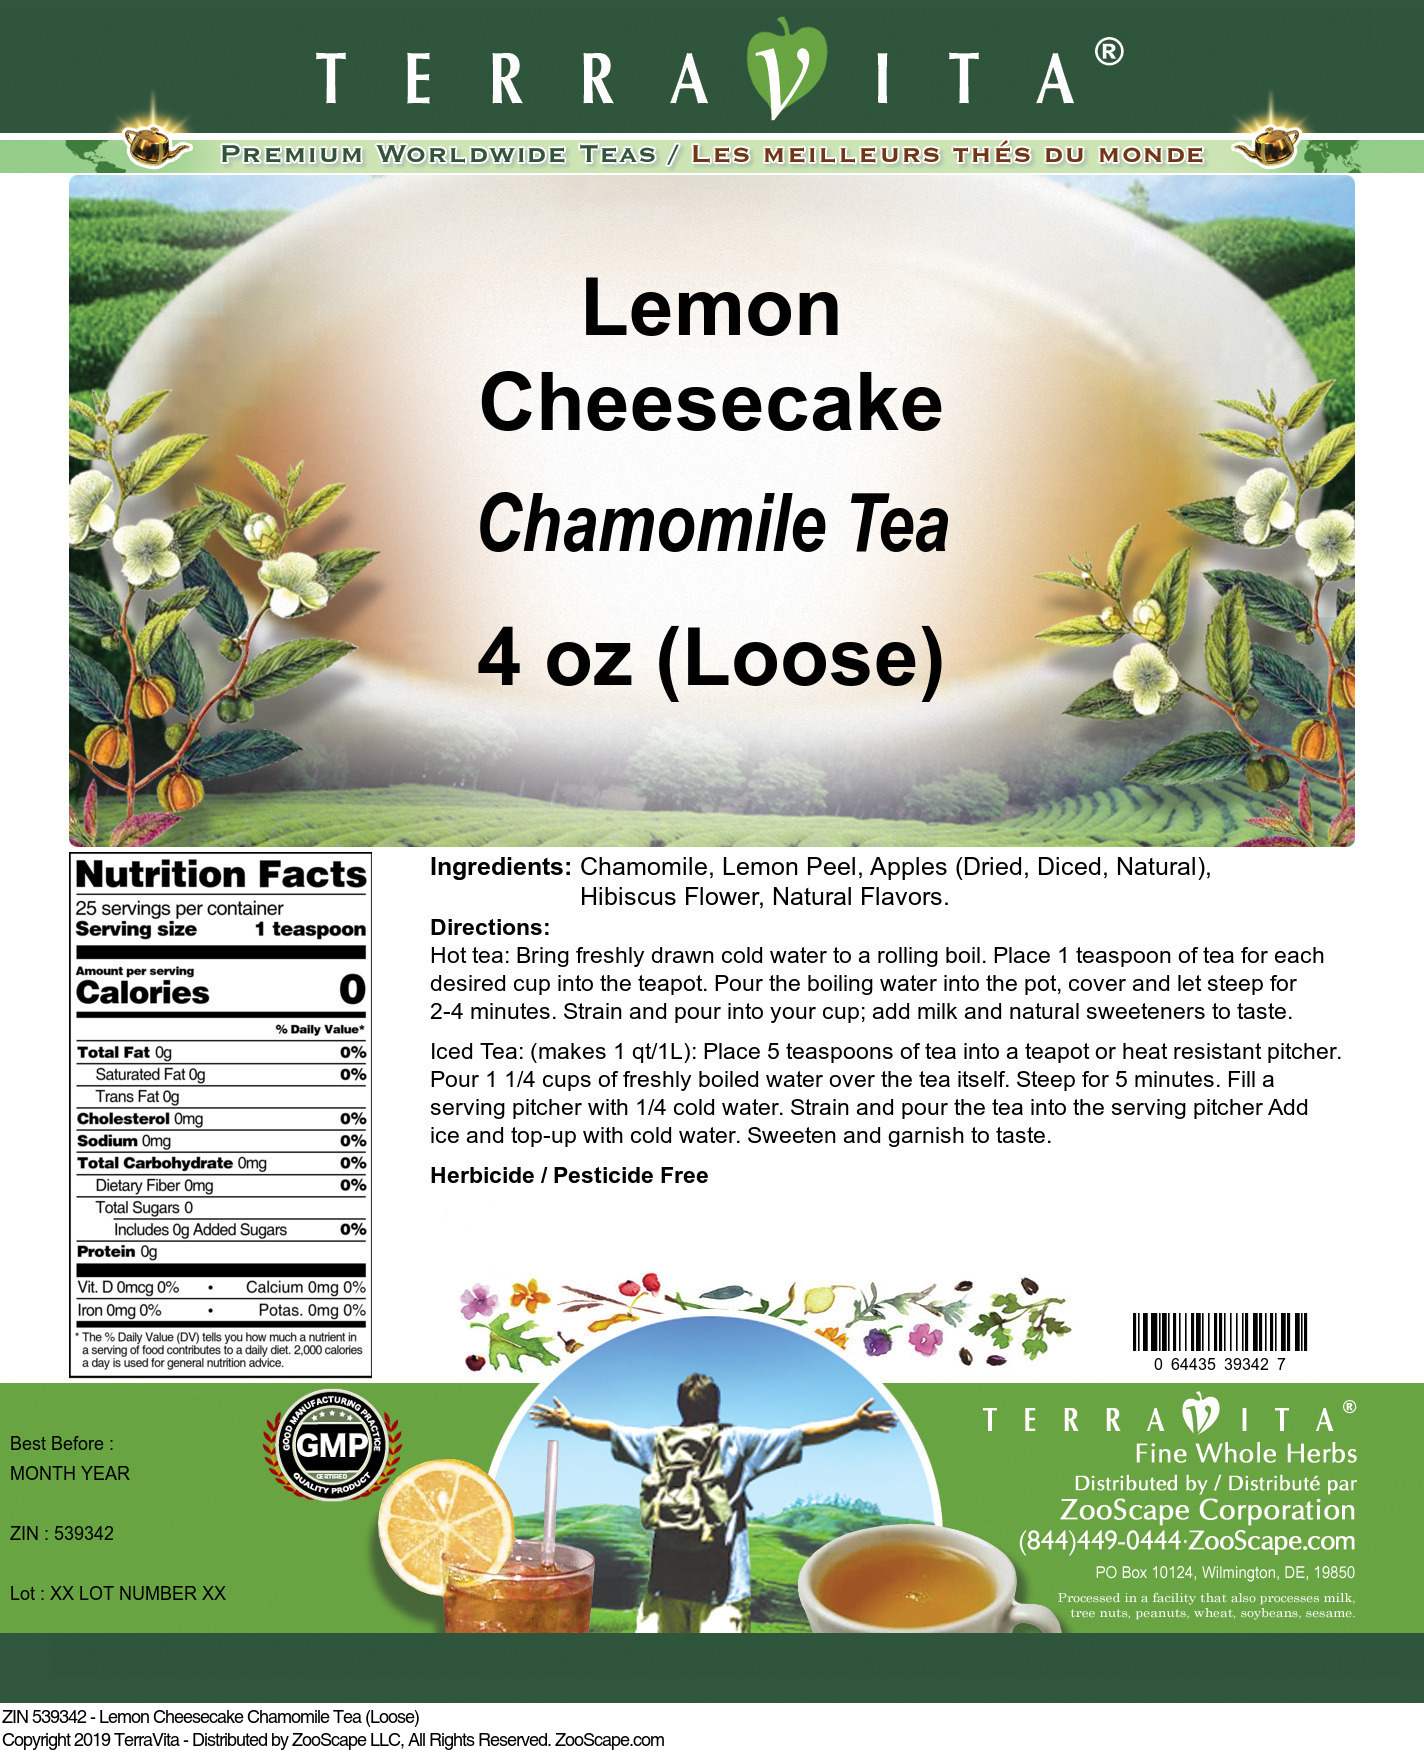 Lemon Cheesecake Chamomile Tea (Loose) - Label